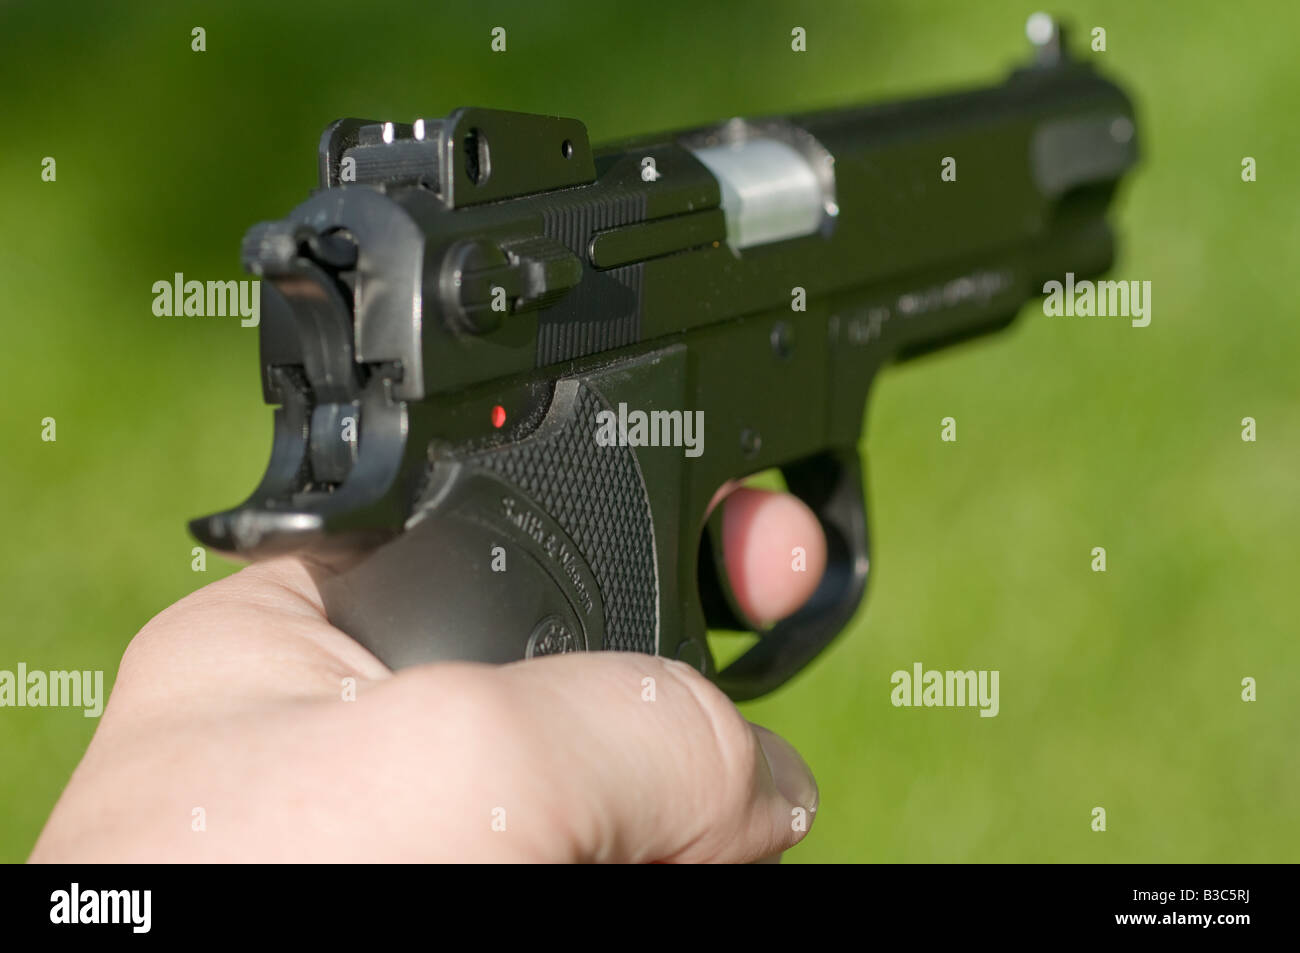 Aiming gun Stock Photo